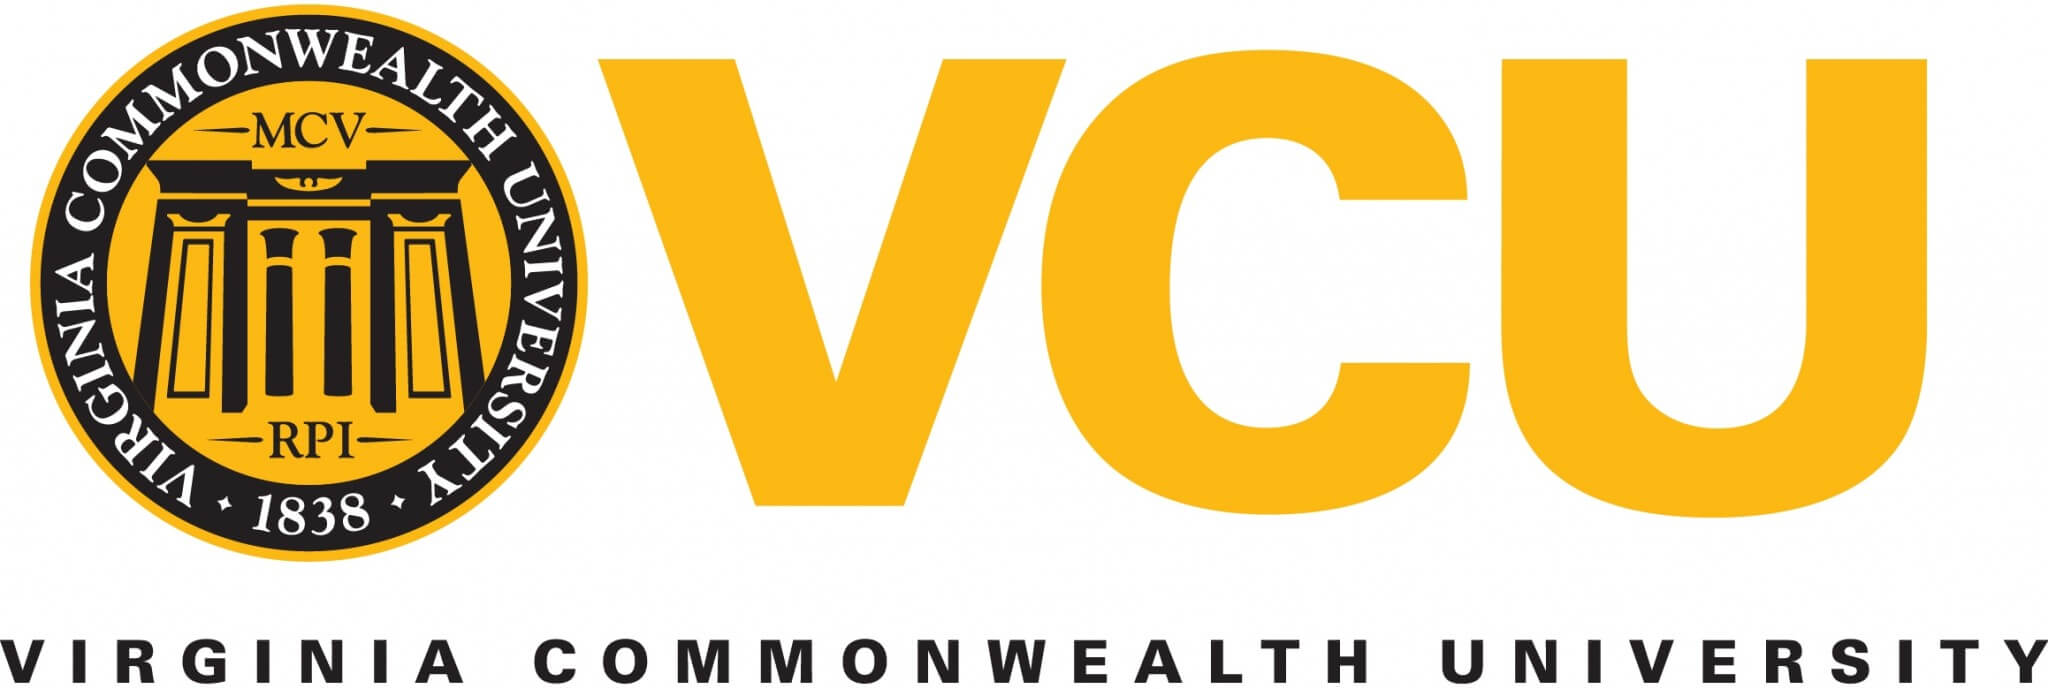 Virginia Commonthwealth University